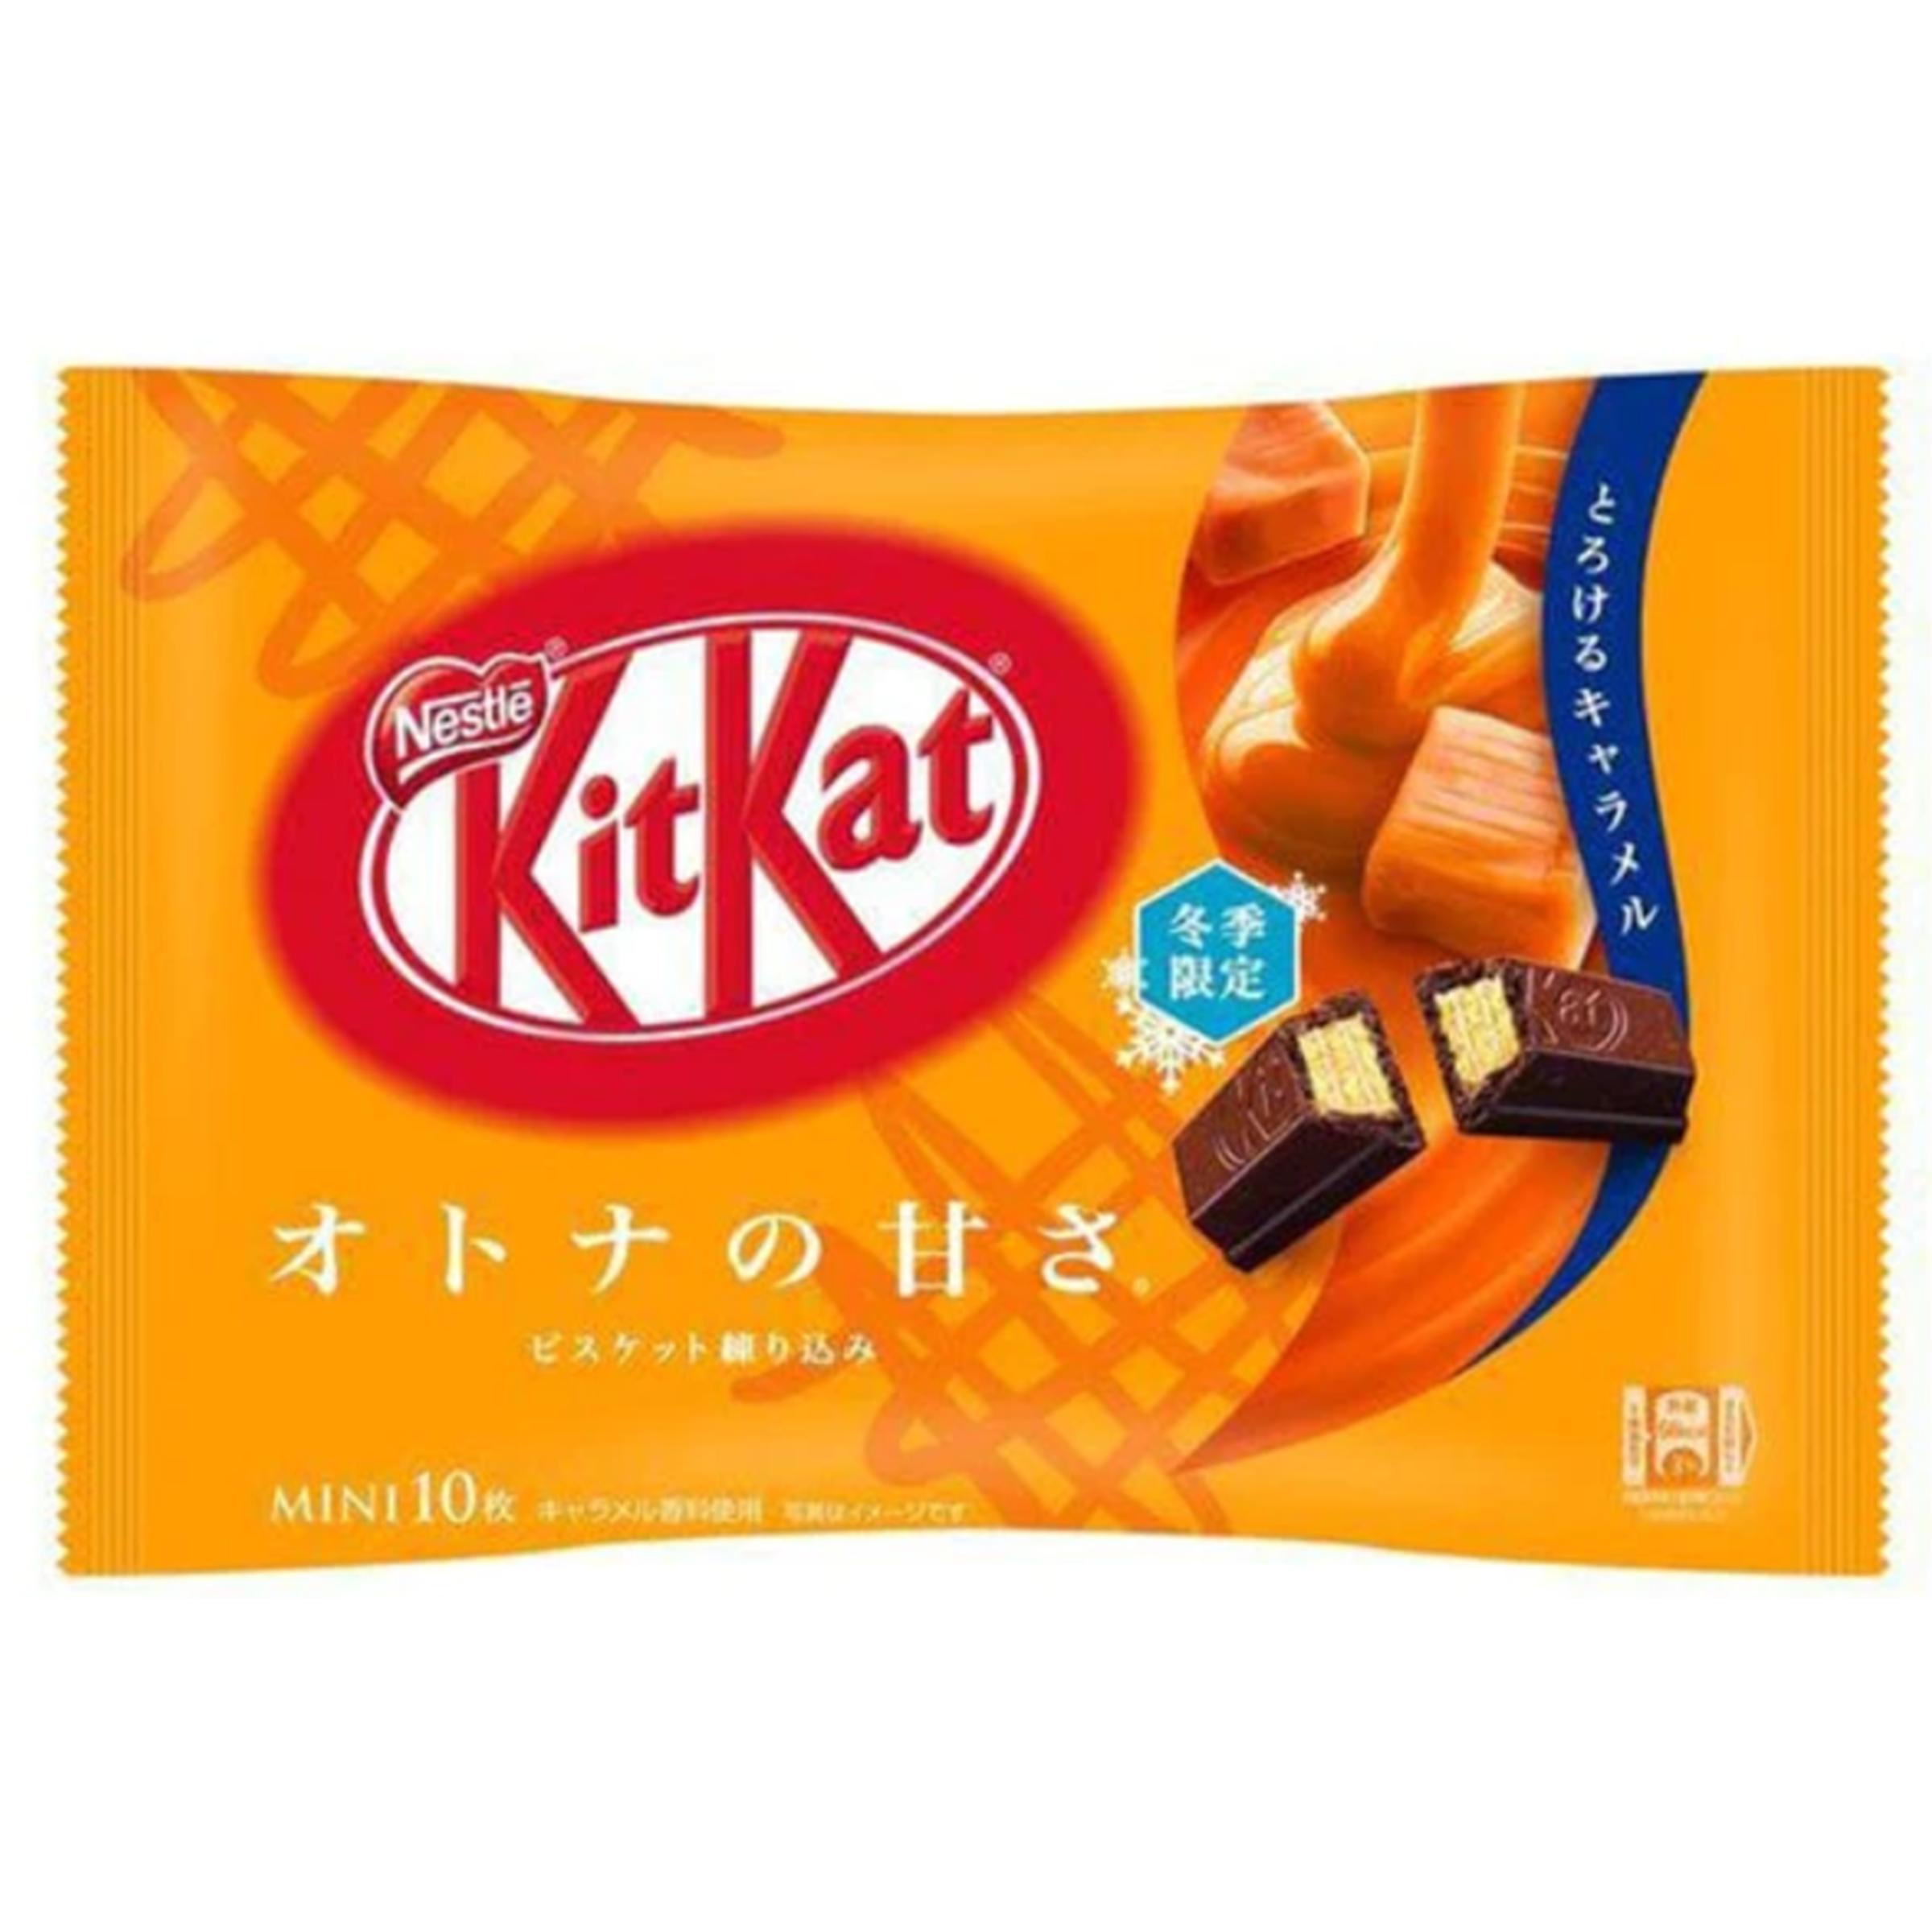 Kit Kat Caramel - Japan